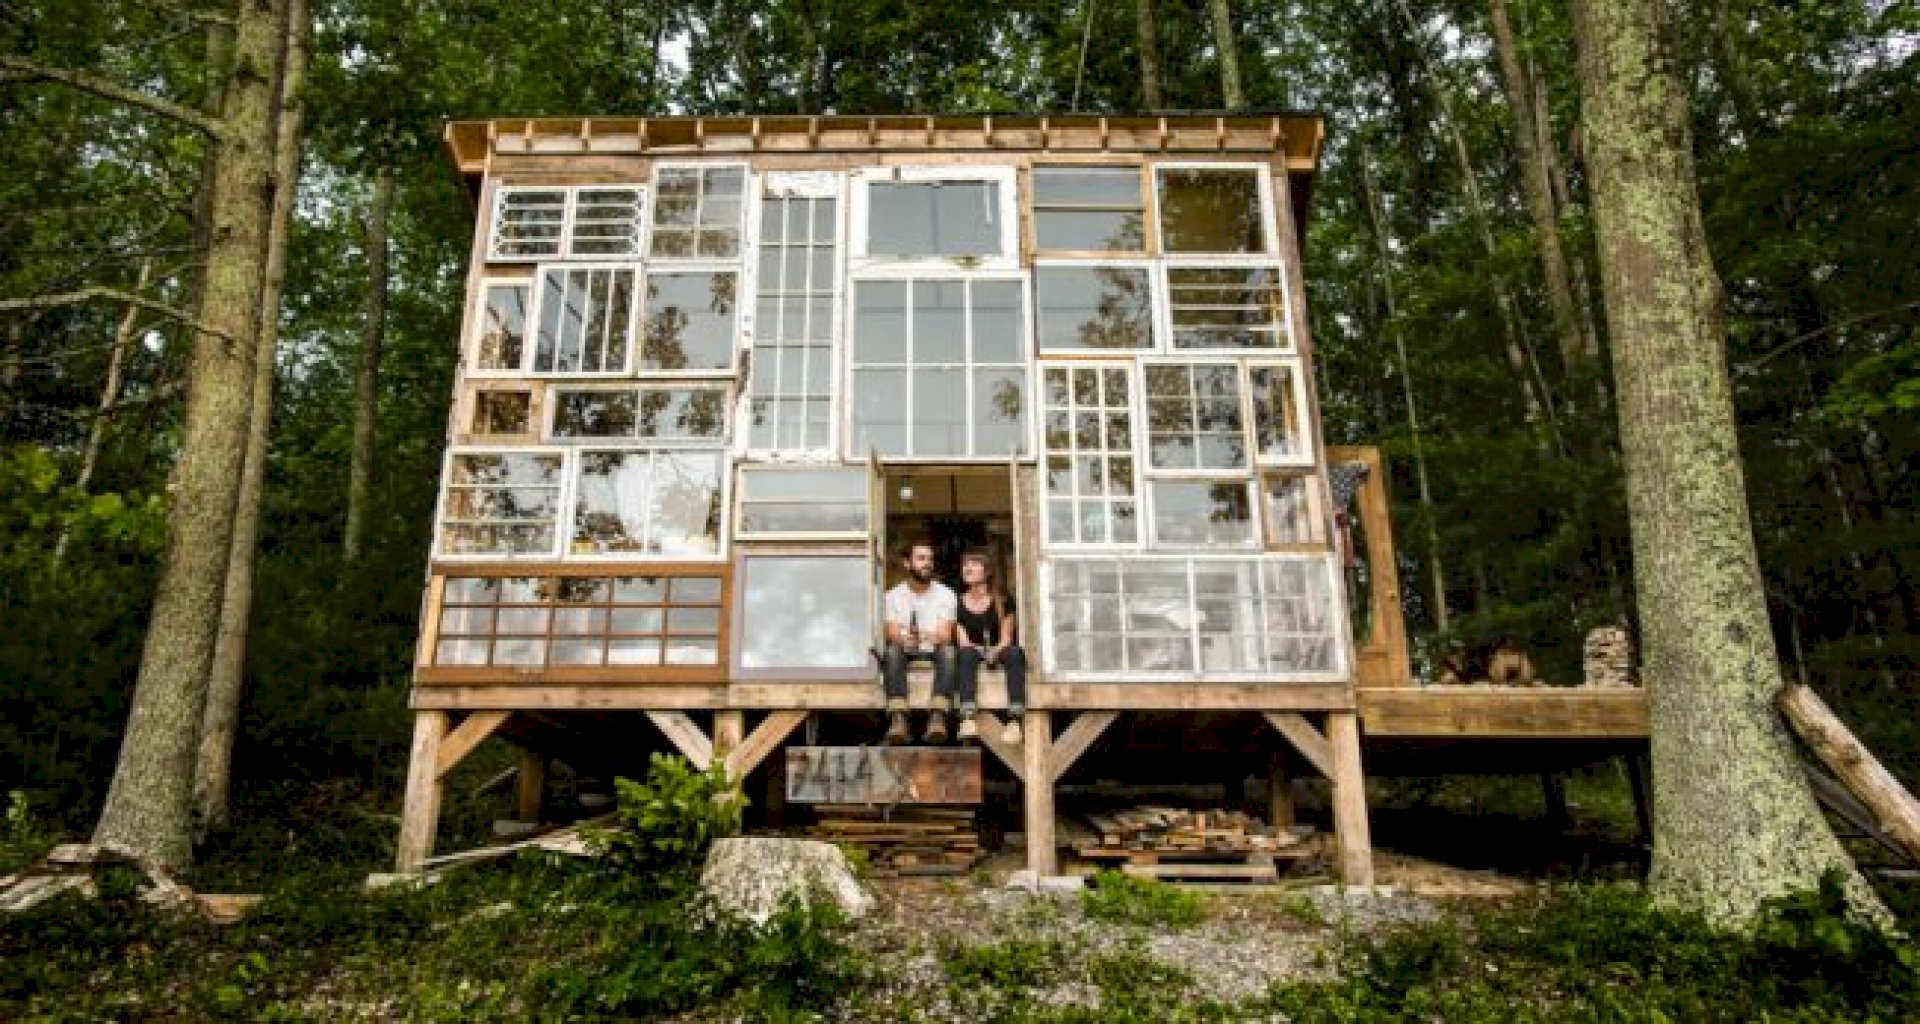 nje-cift-ndertuan-nje-kabine-nga-dritaret-e-ricikluara